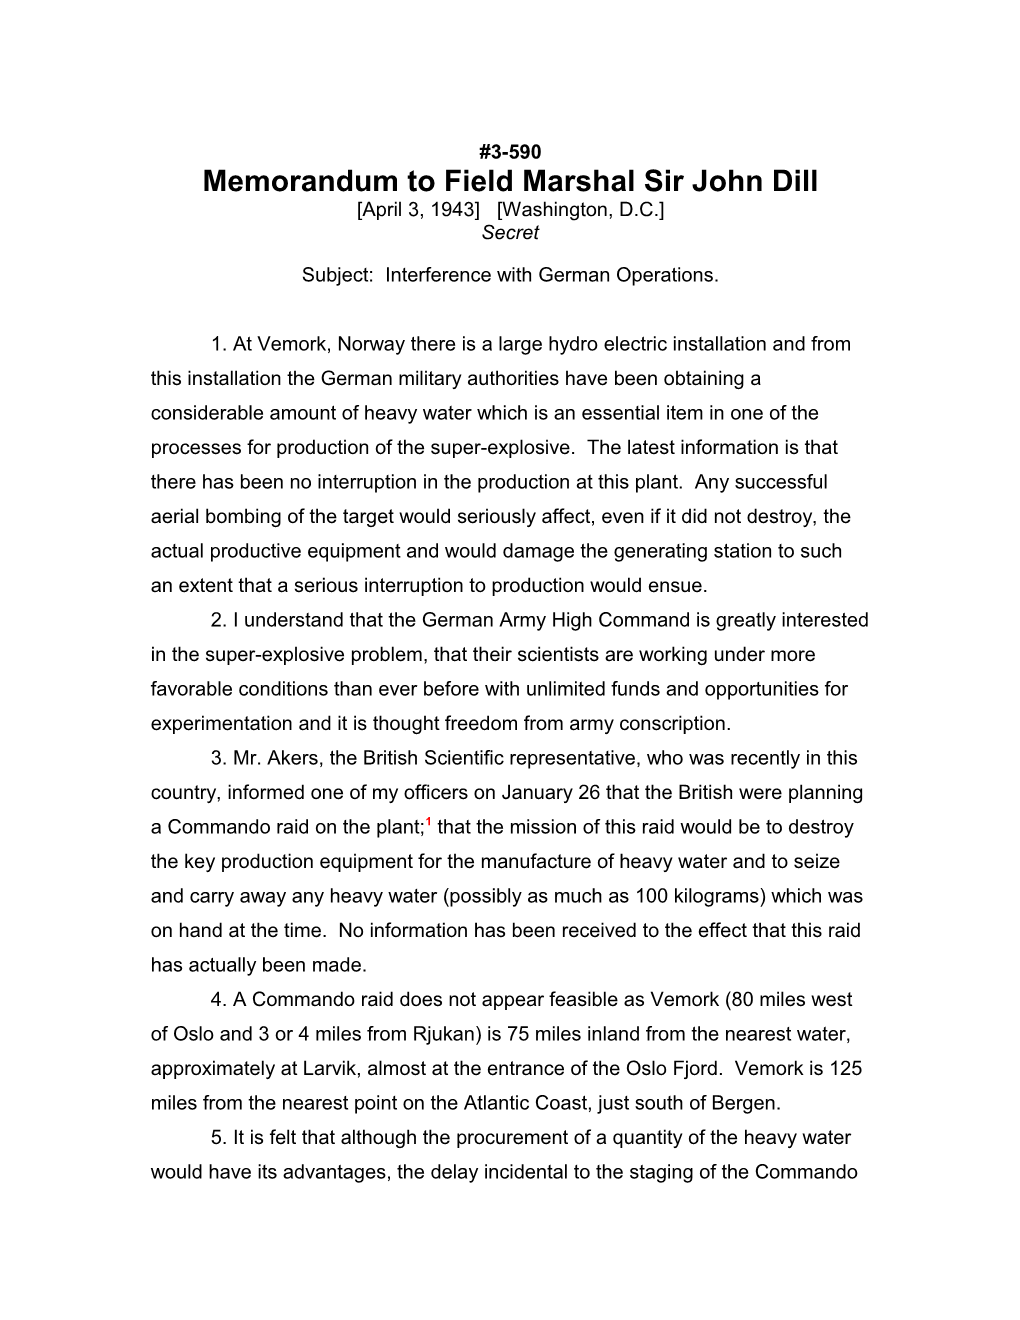 Memorandum to Field Marshal Sir John Dill